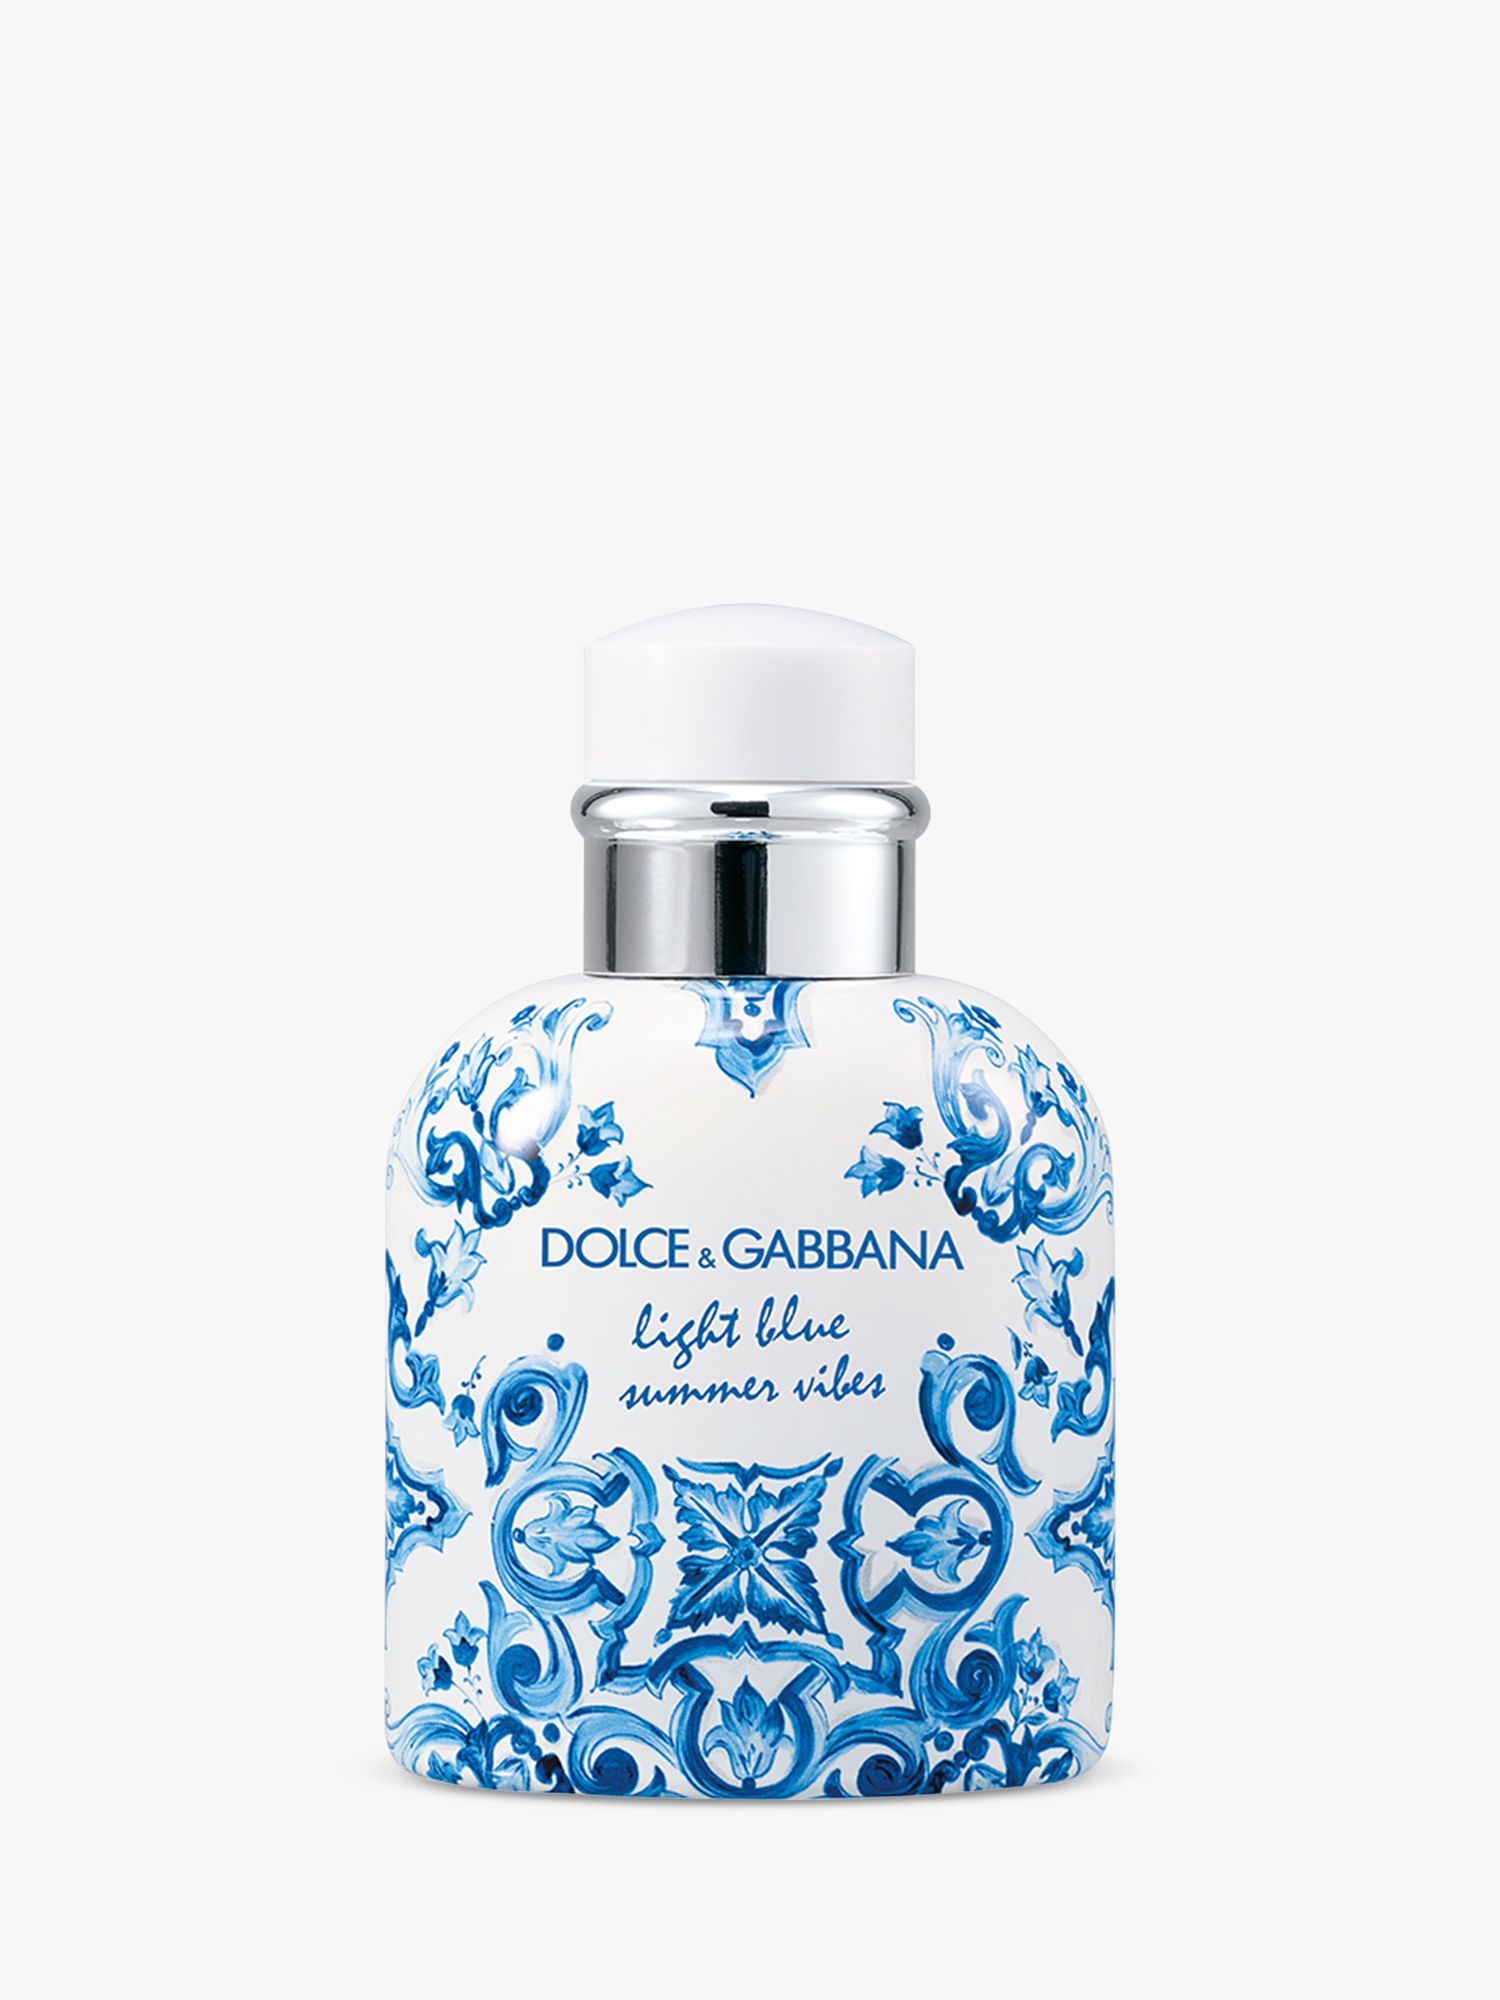 Dolce & Gabbana Light Blue Summer Vibes Homme Eau de Toilette, 75ml at John Lewis & Partners